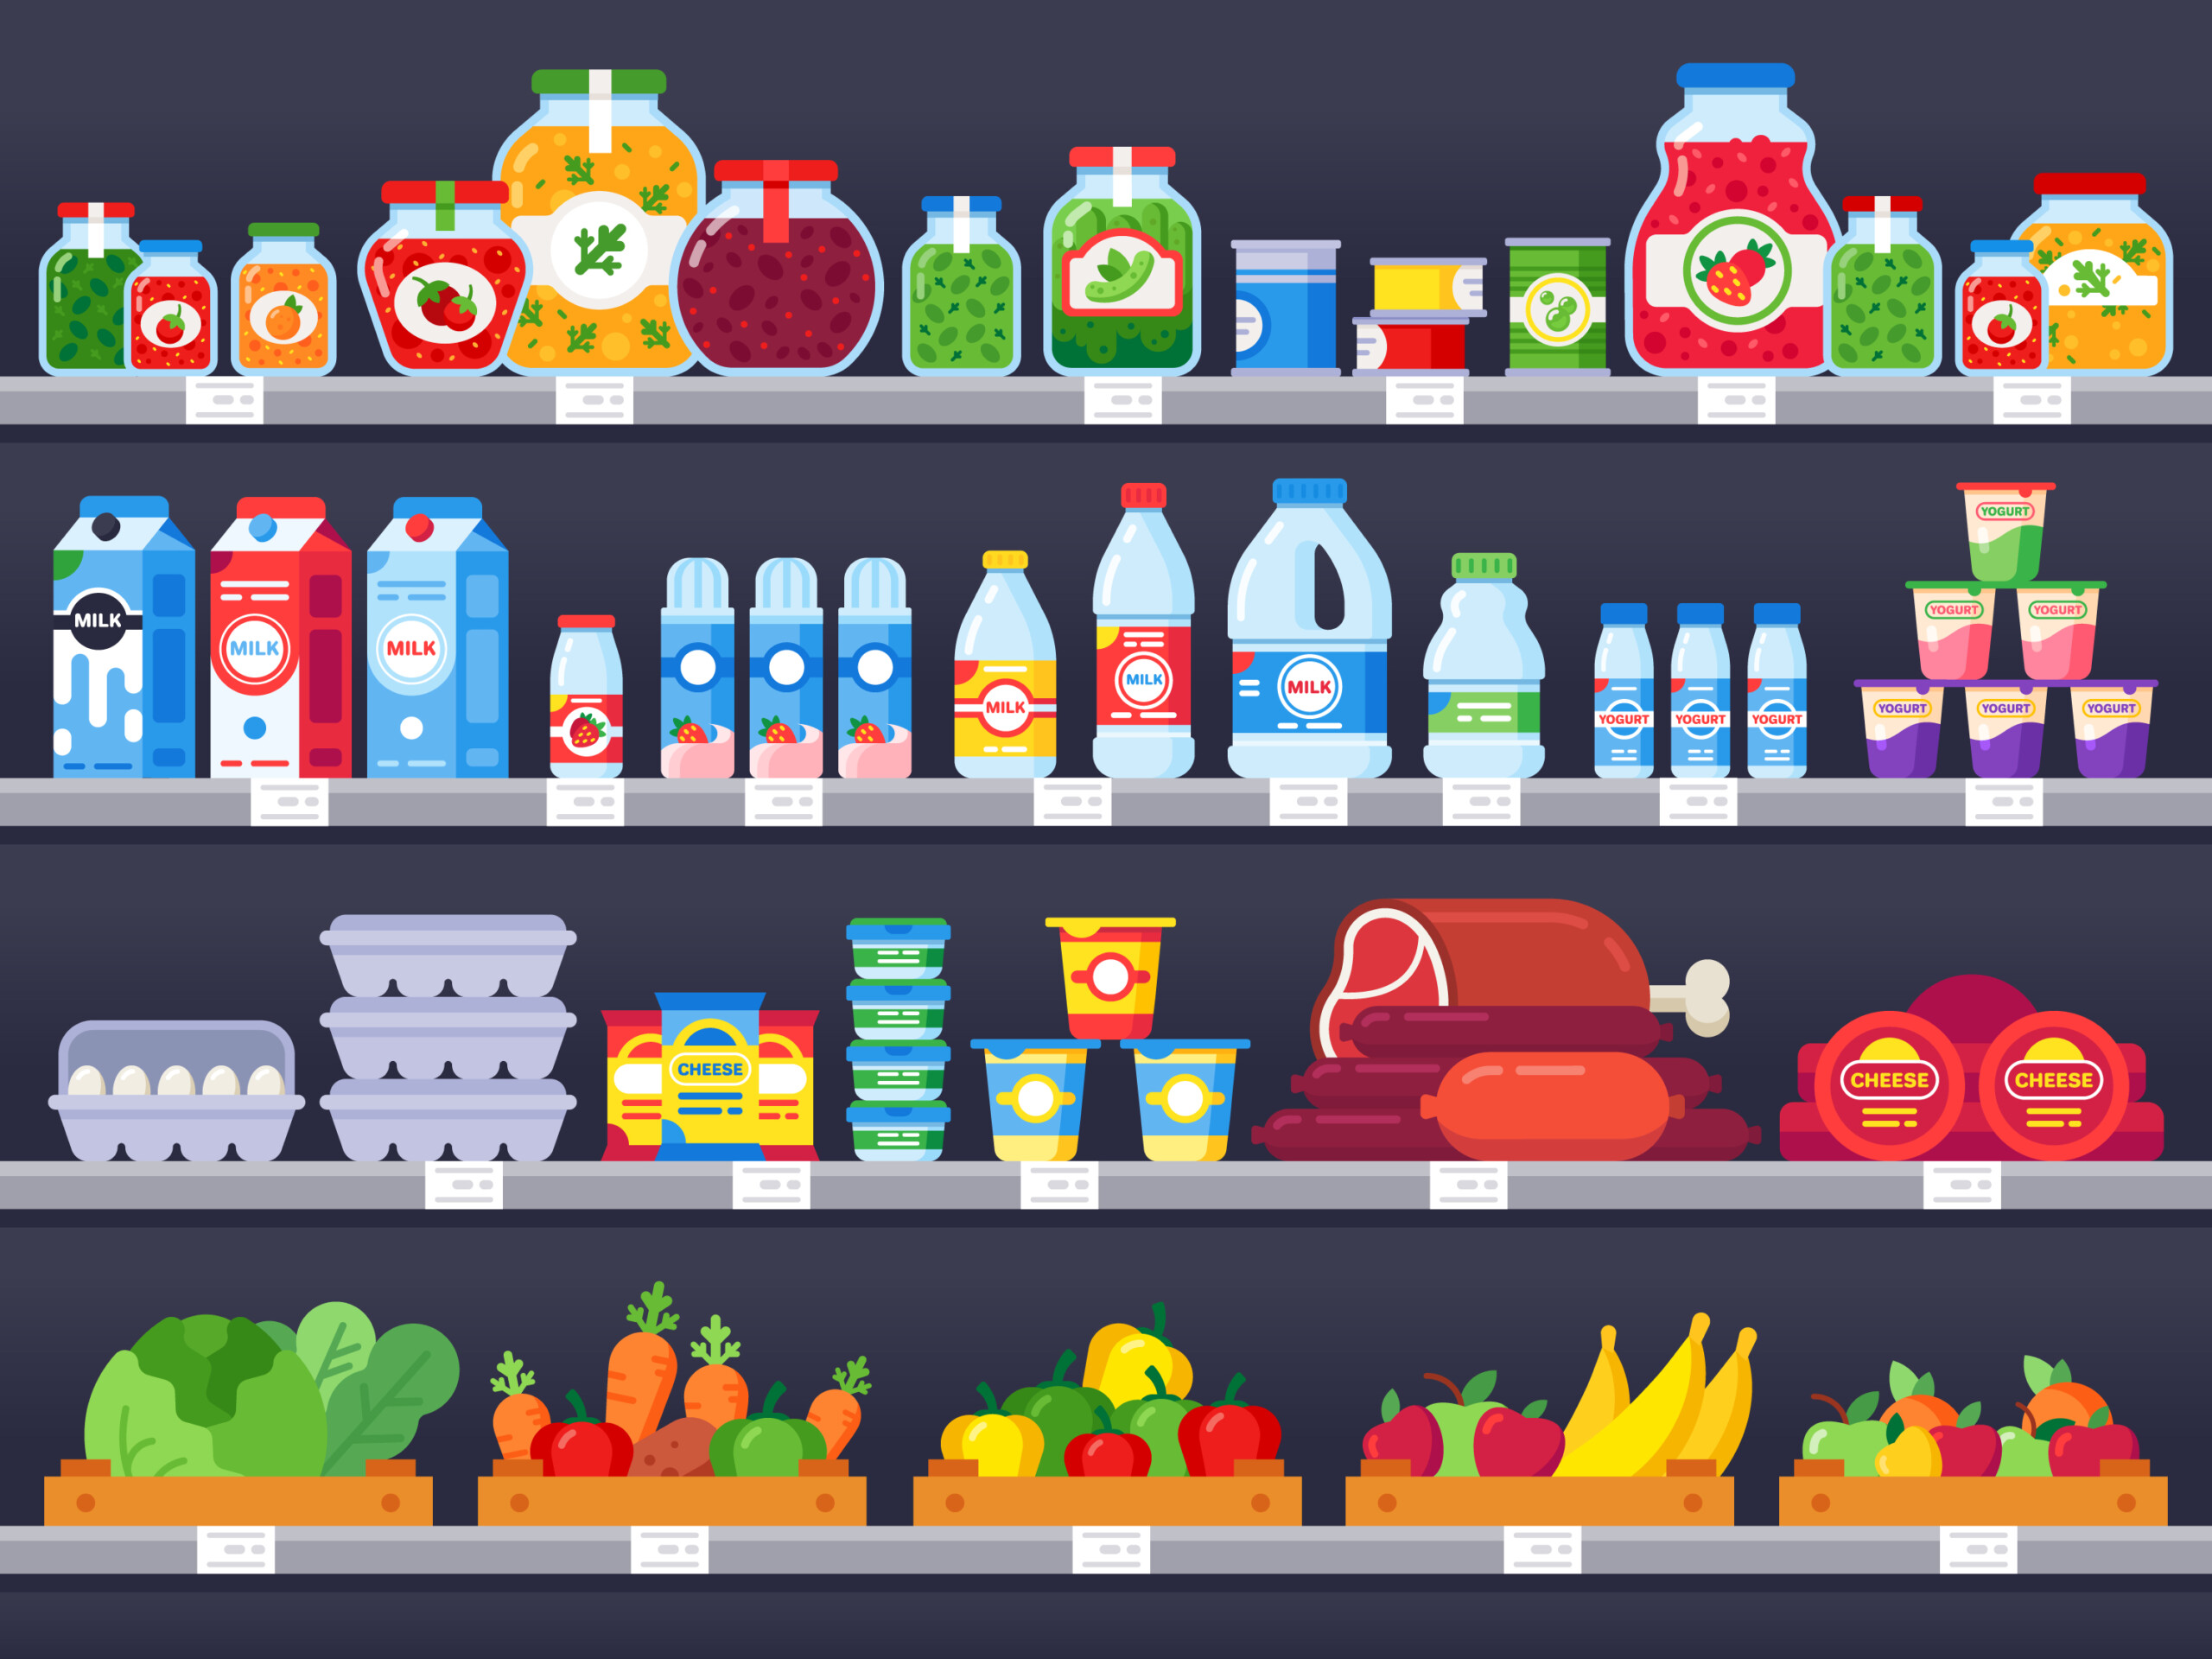 Food Products On Shop Self - Original image